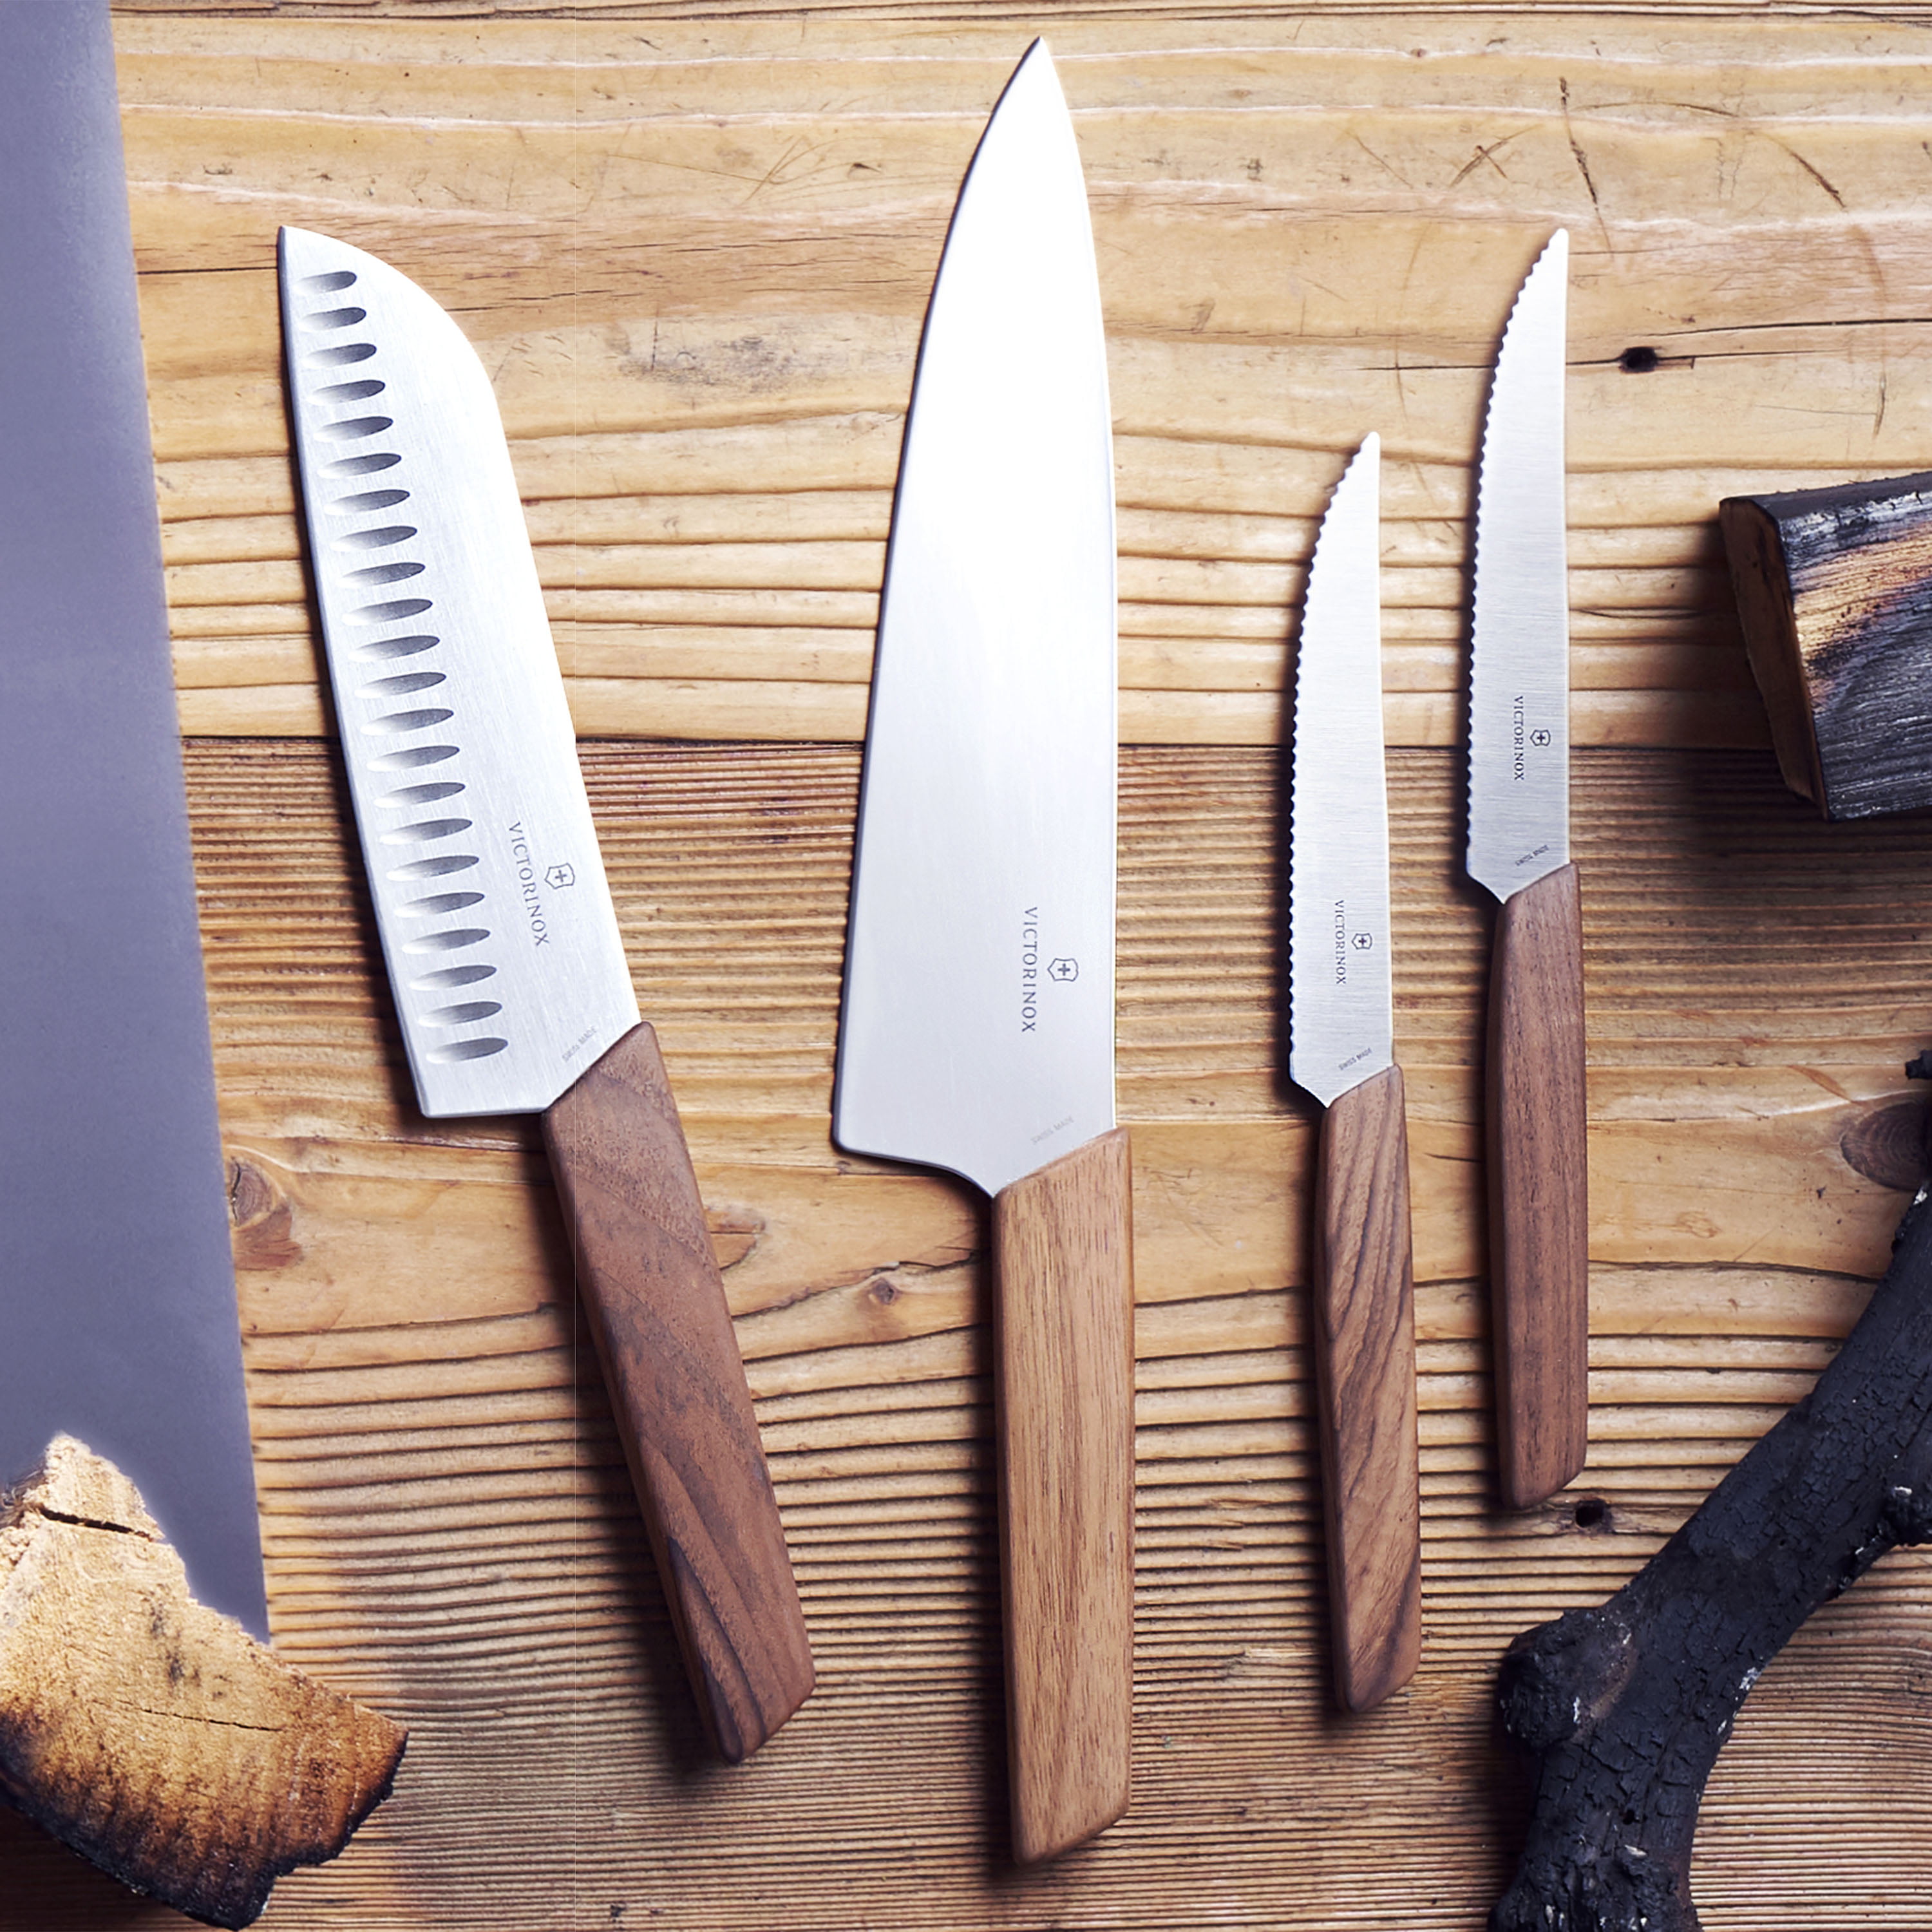 Victorinox Swiss Modern Kitchen Knife Block Set In Stainless